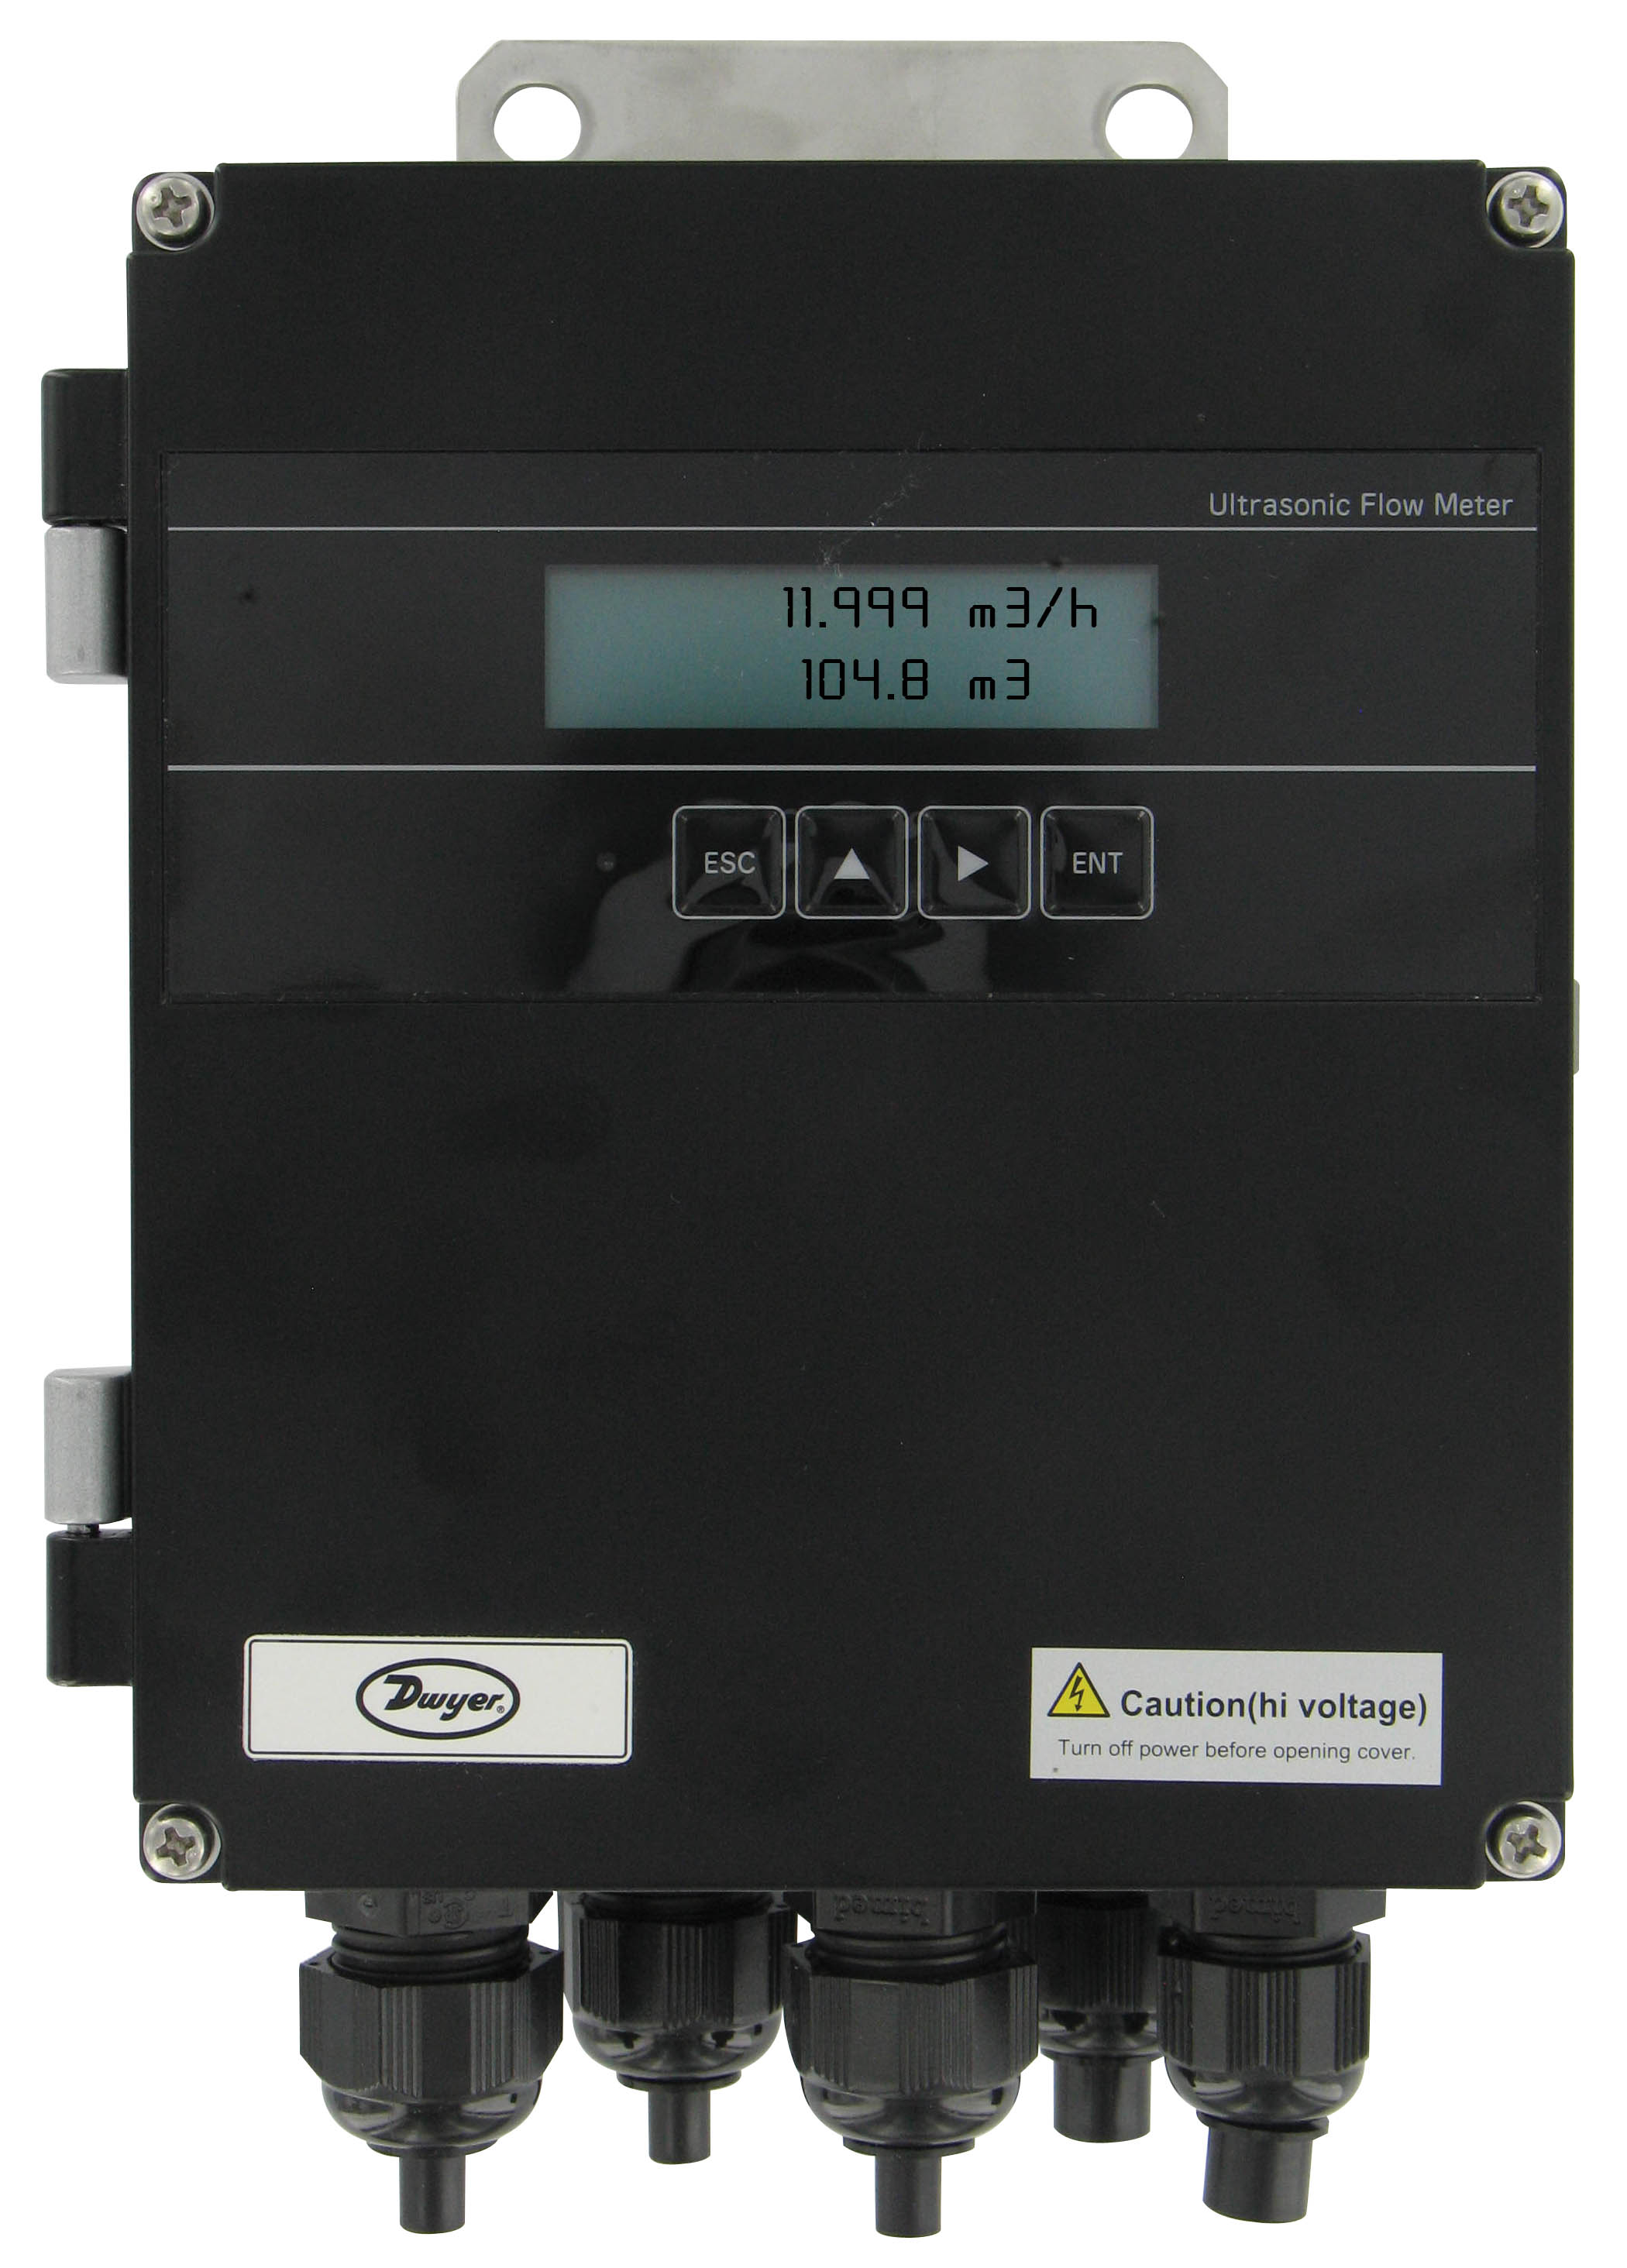 Series Uxf3 Ultrasonic Flowmeter Converter Dwyer Instruments Inc